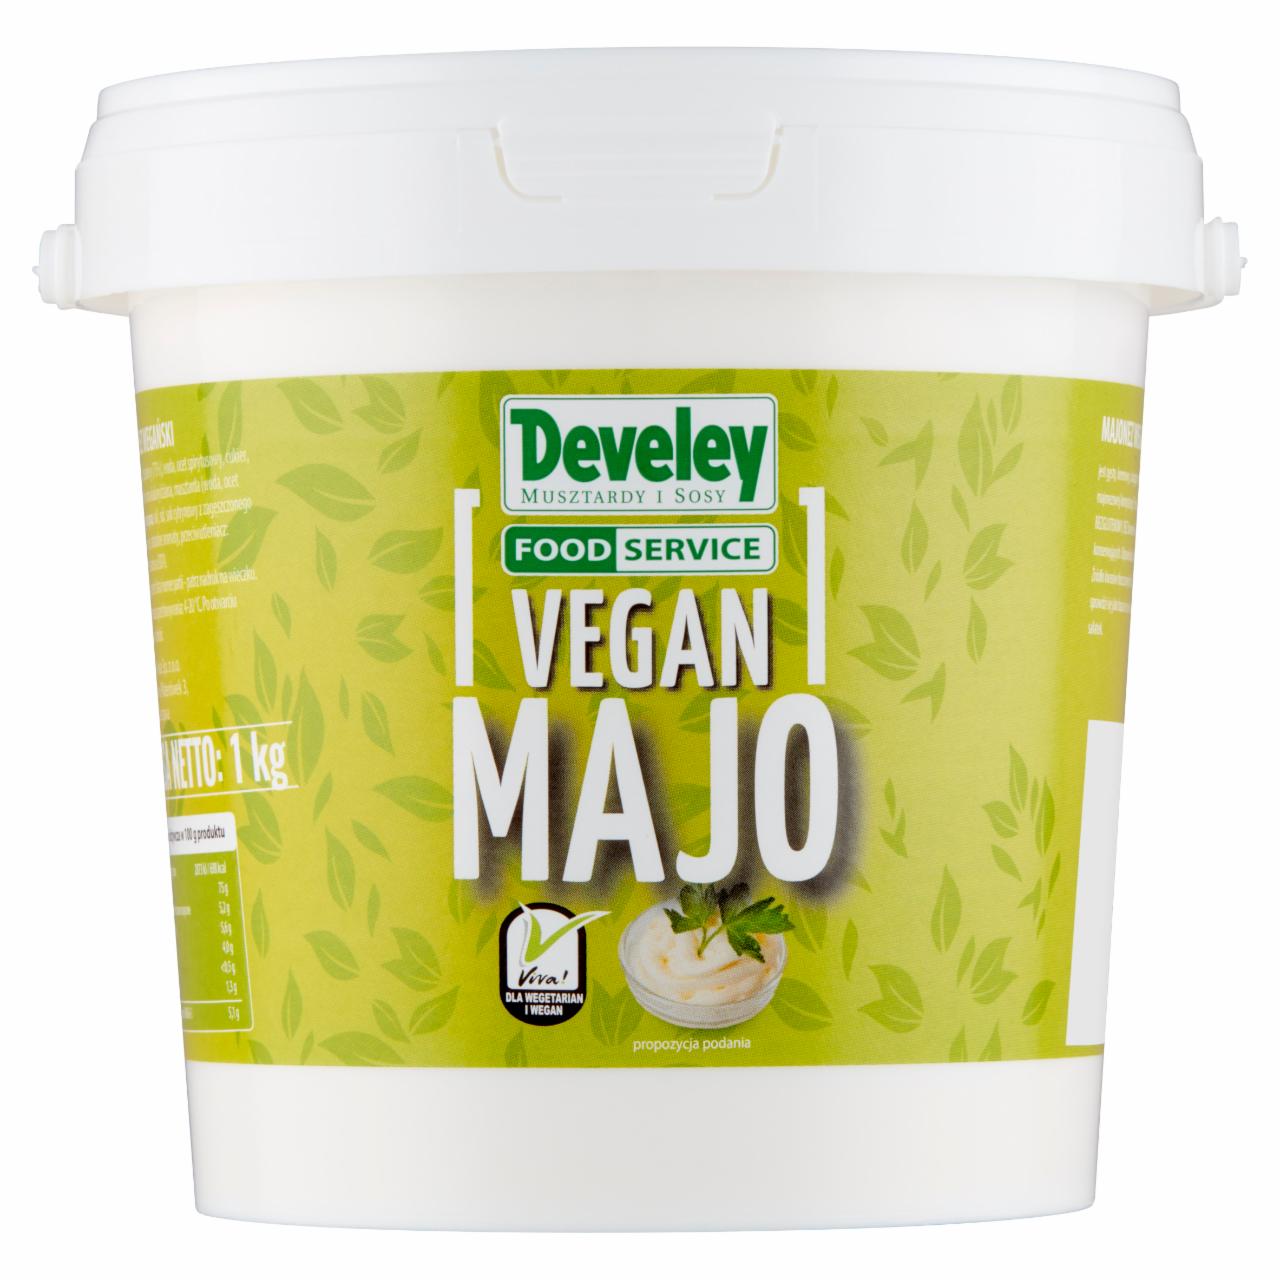 Zdjęcia - Develey Food Service Vegan majo Majonez wegański 1 kg